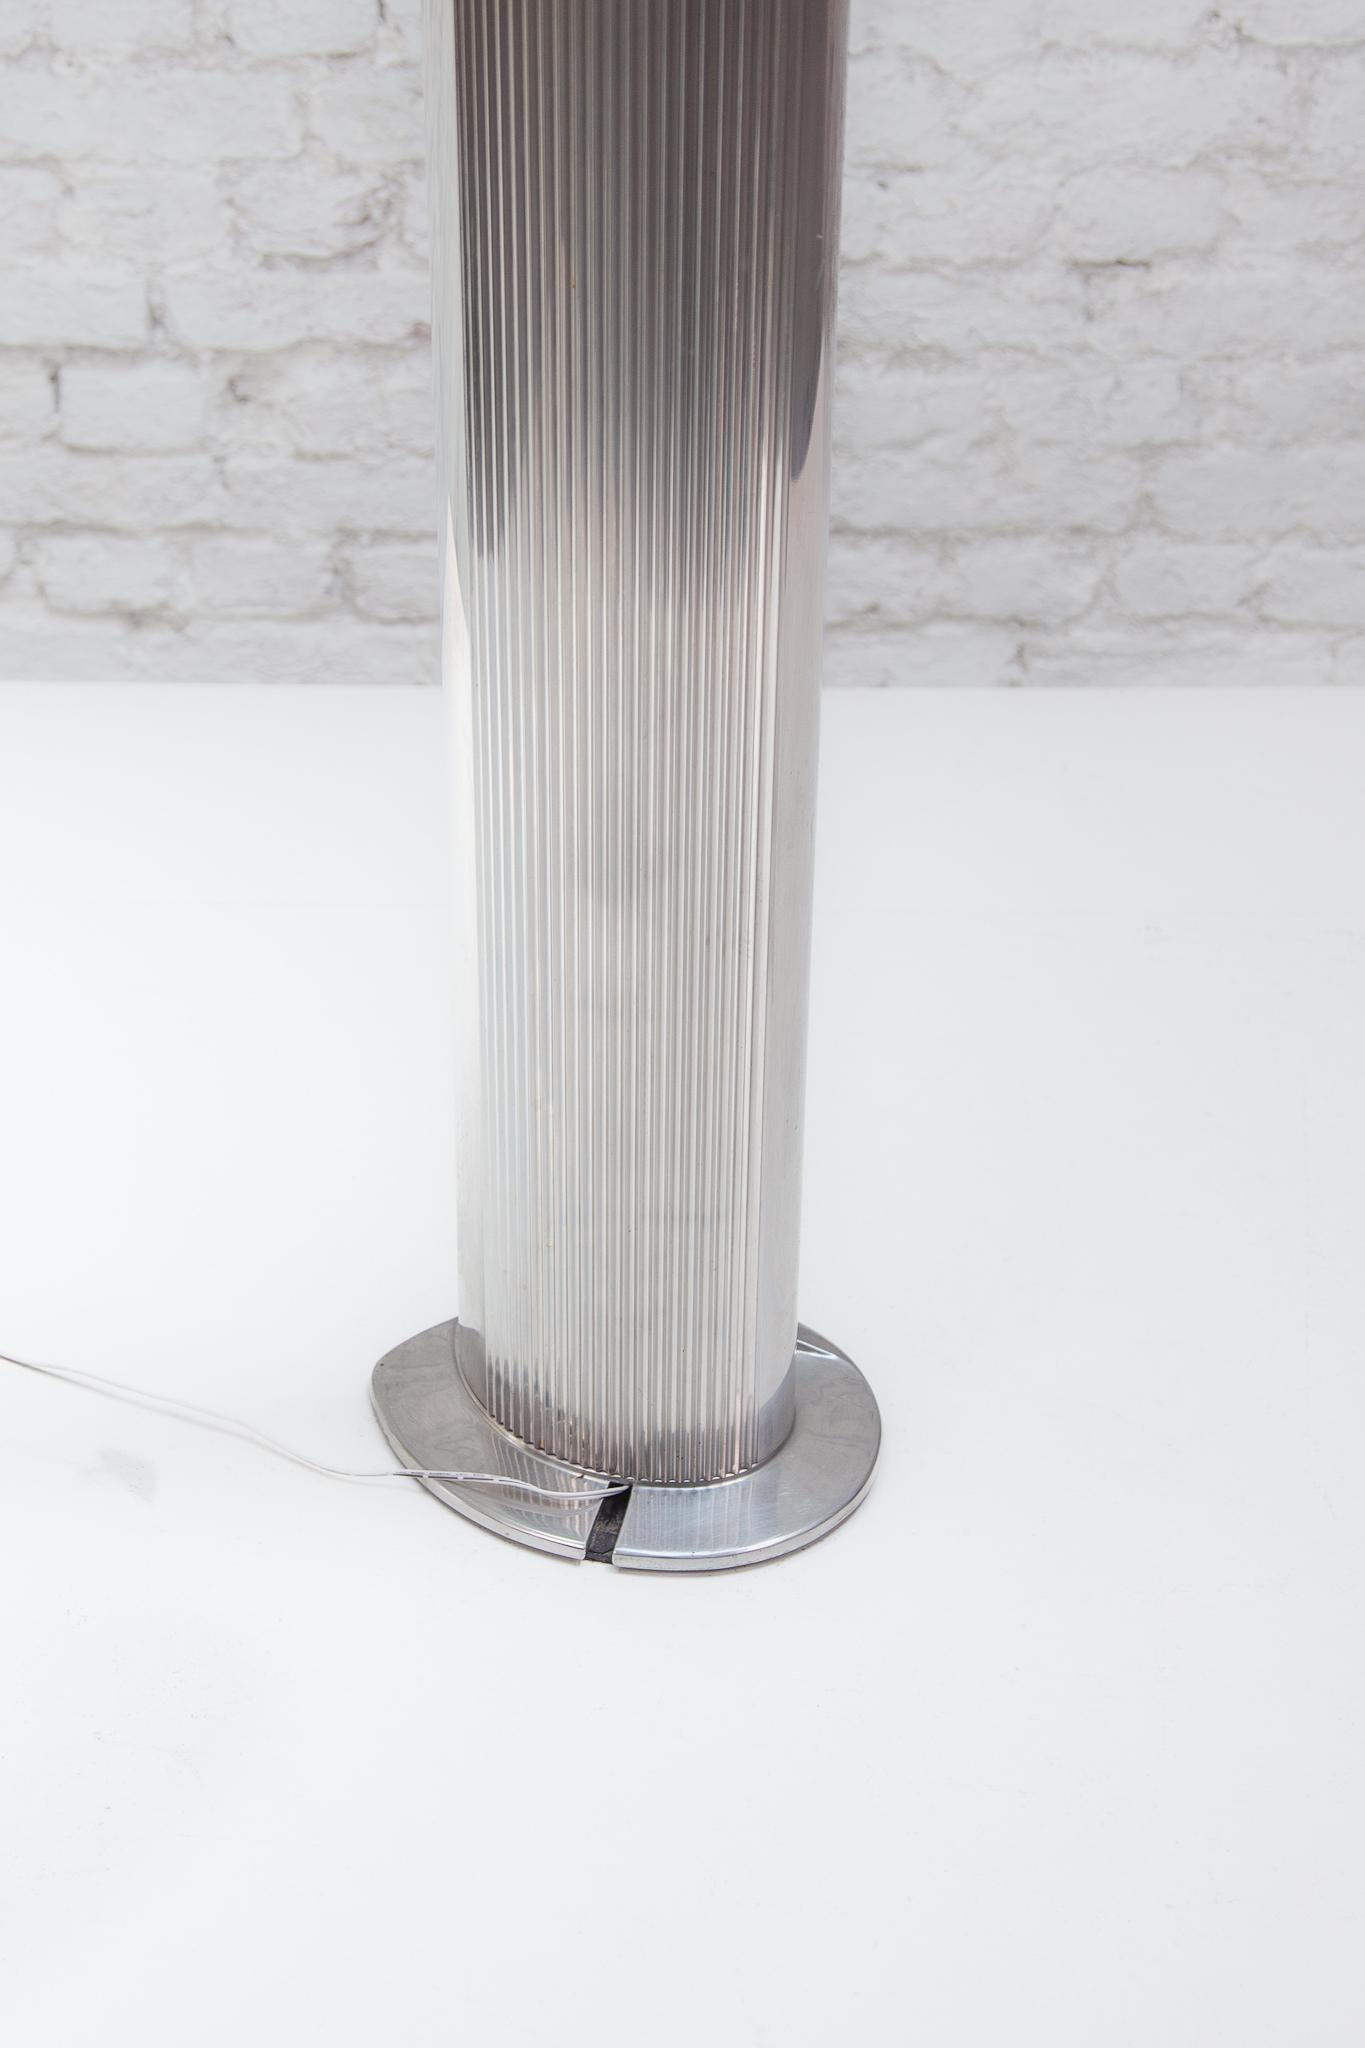 Aluminum 1980s Penombra Floor Lamp by Antoni Flores for Sargot Barcelona For Sale 4